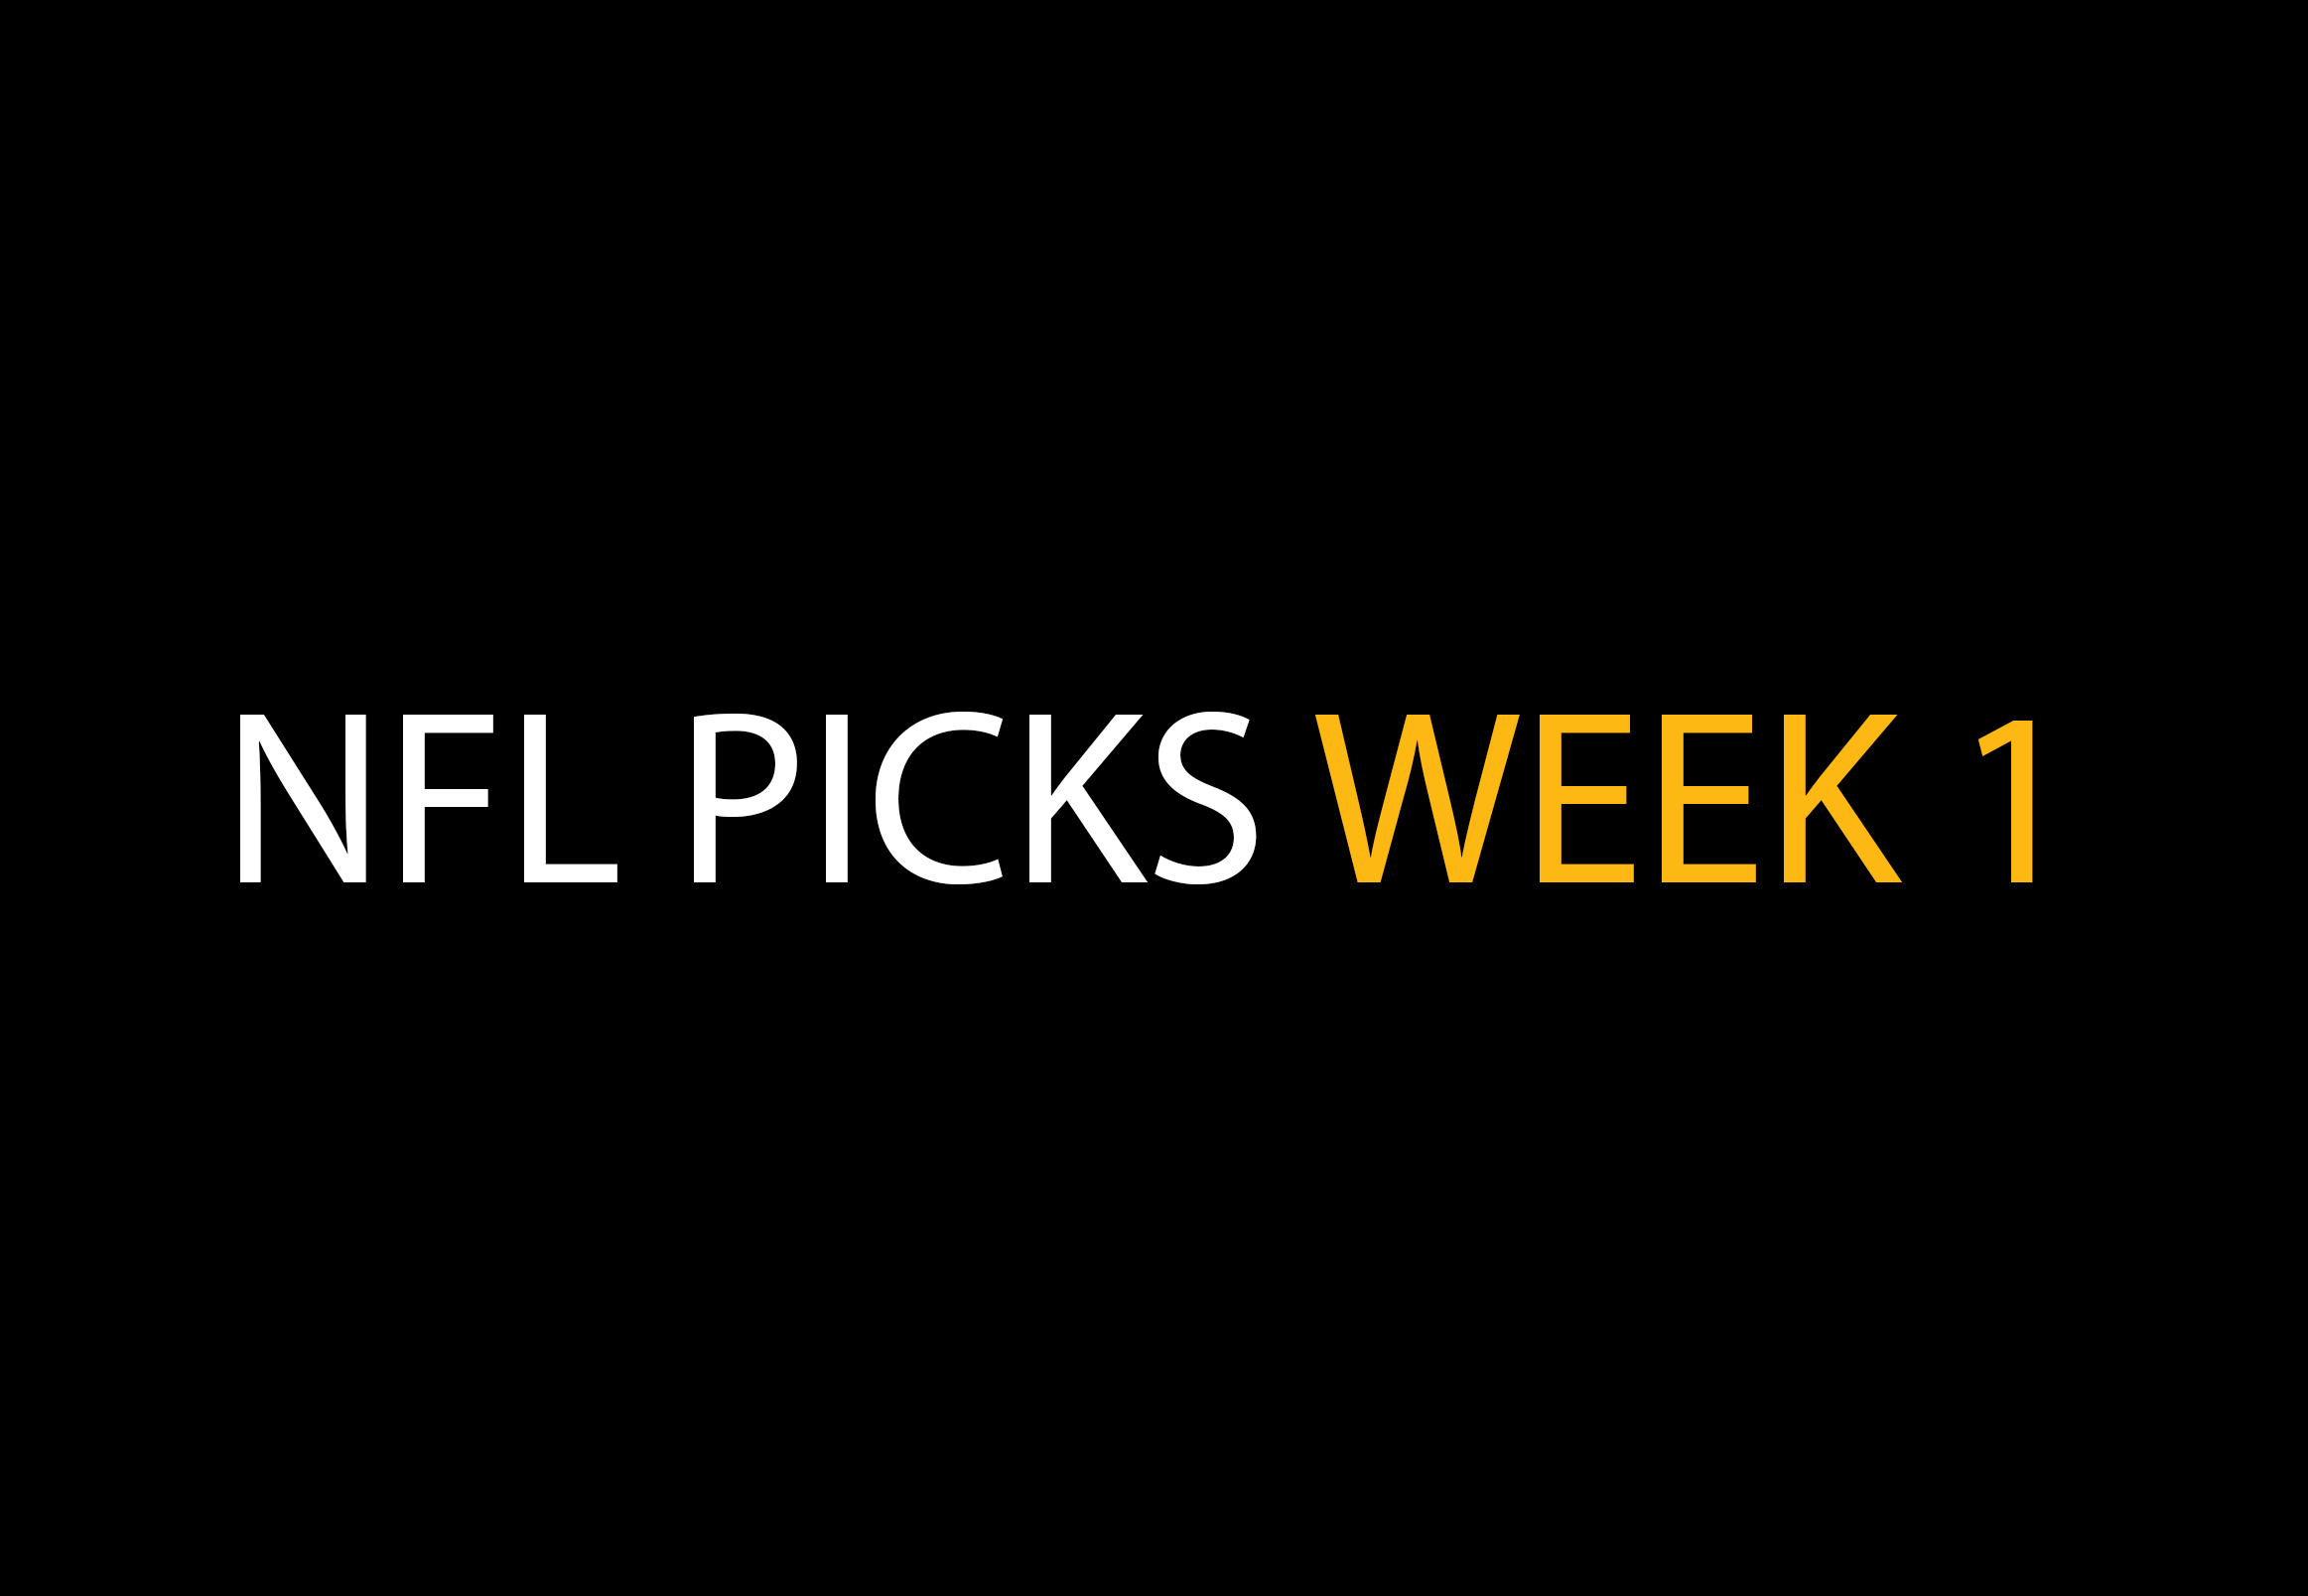 week 1 nfl picks and predictions